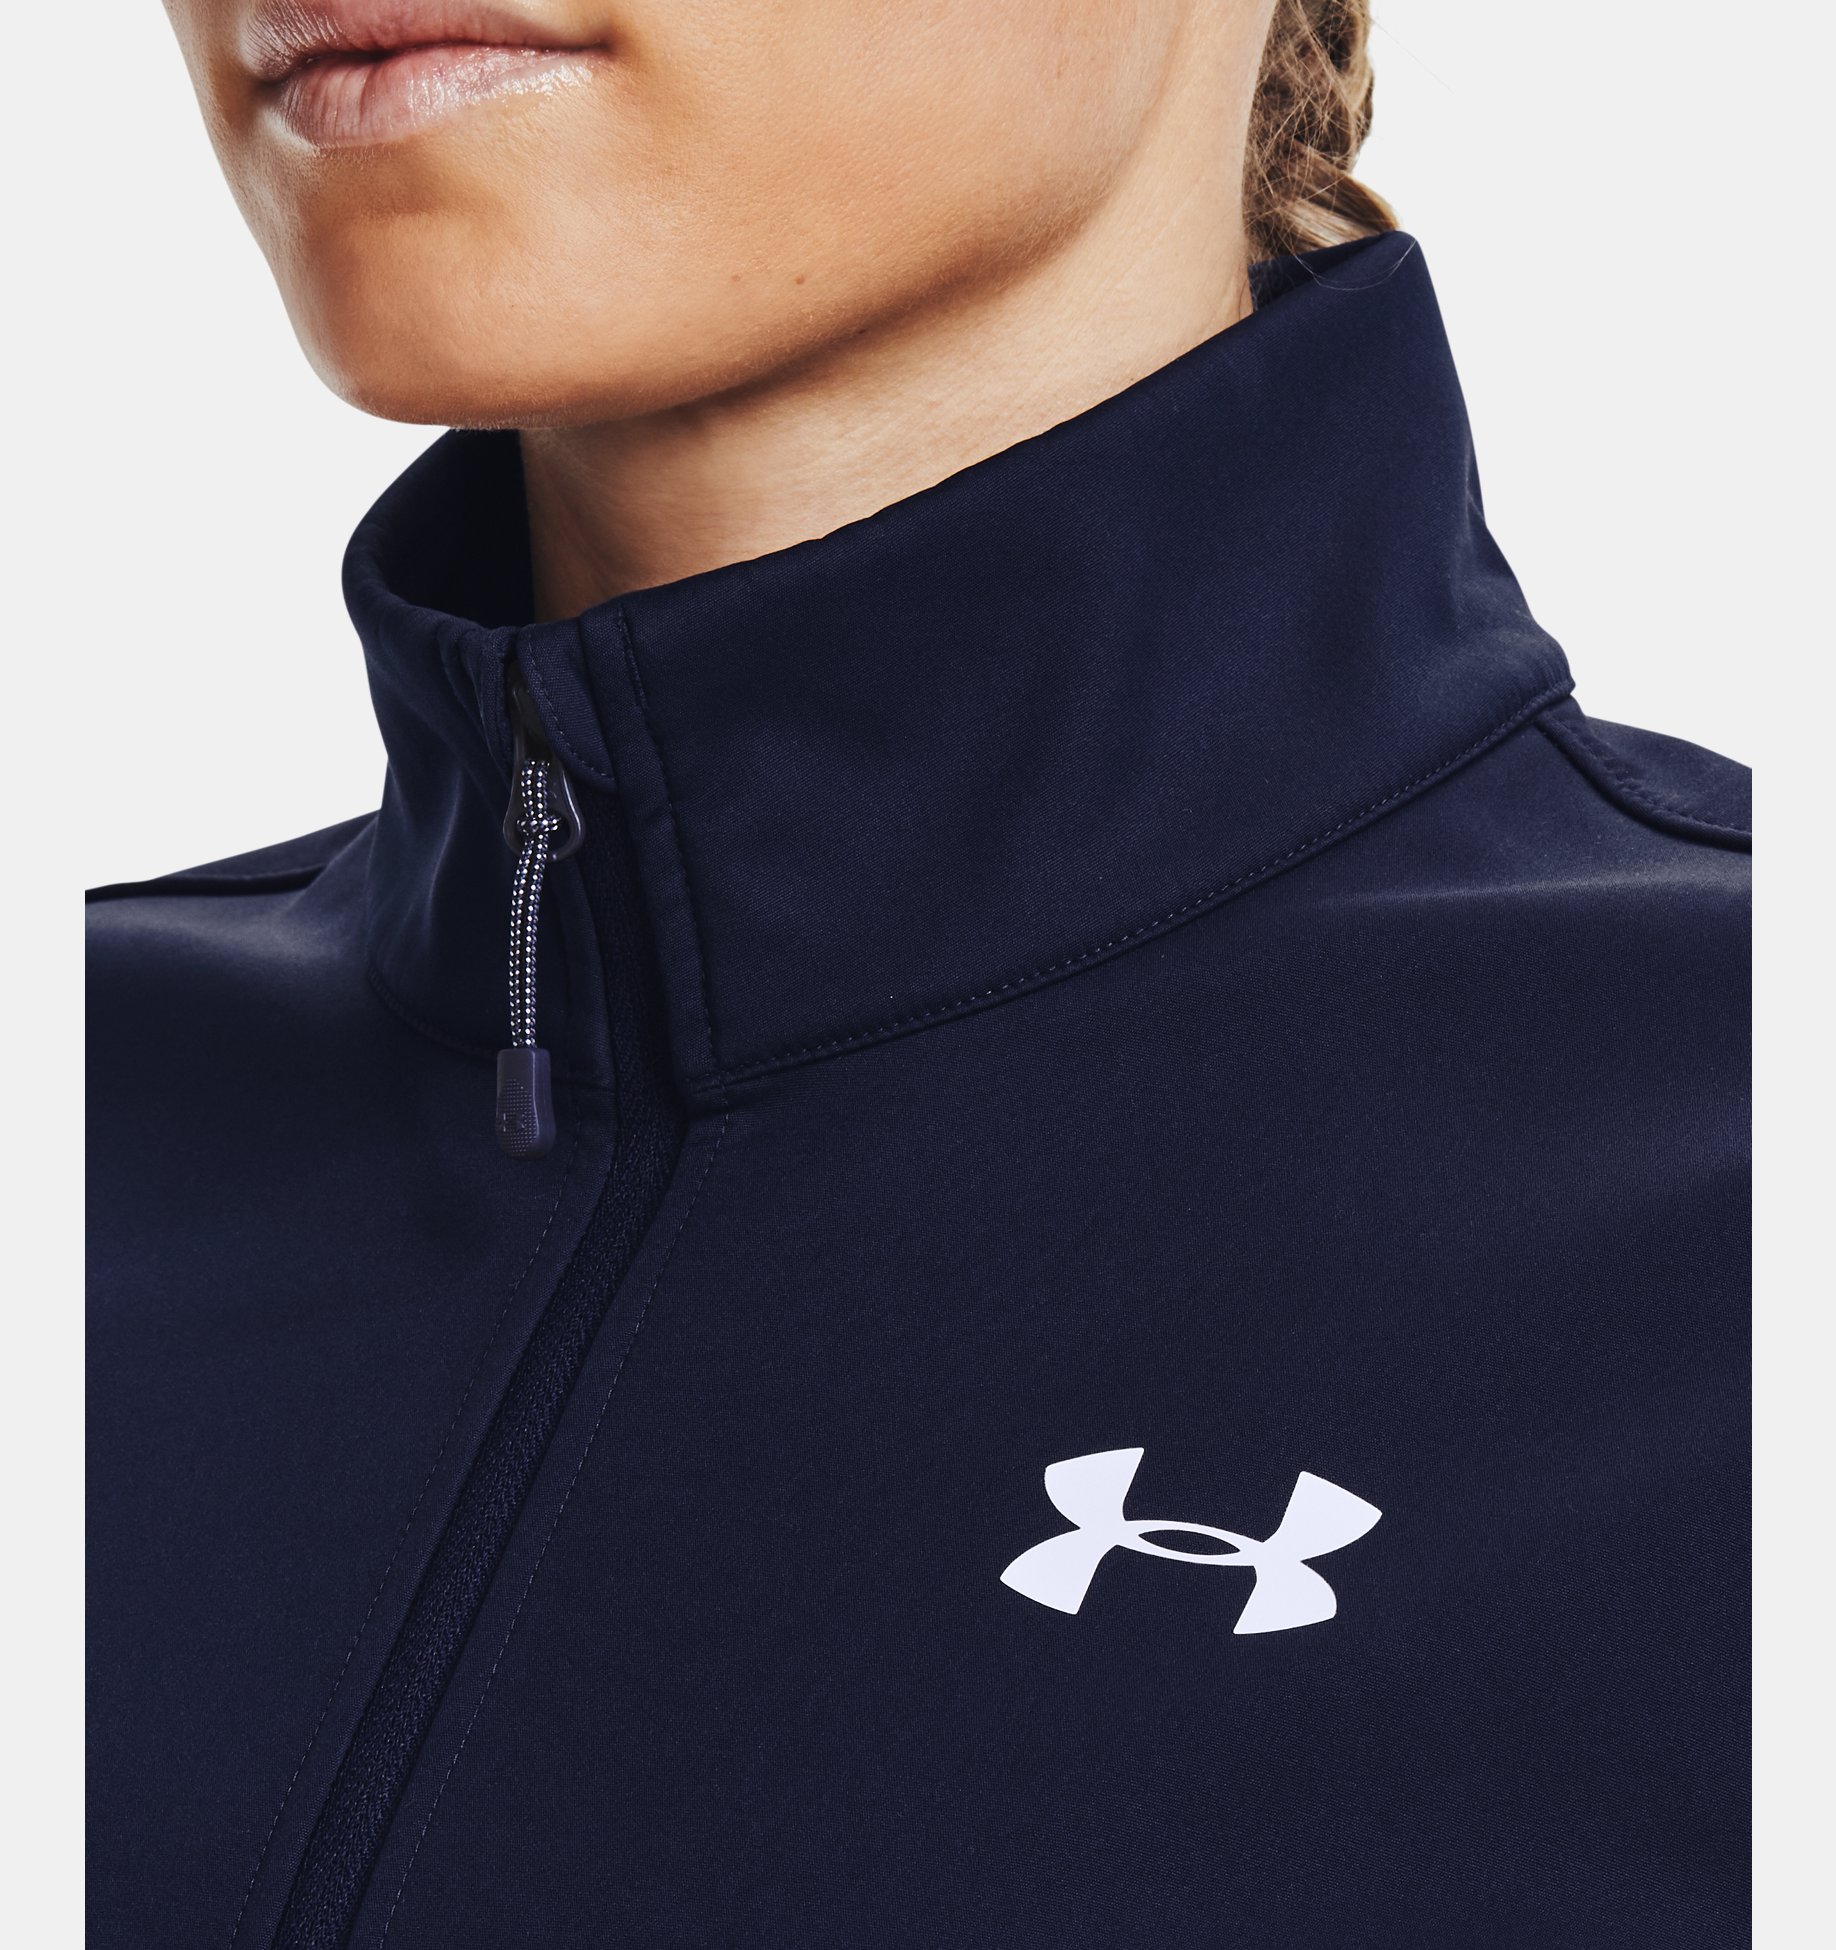 Women's UA Storm ColdGear® Infrared Shield Jacket